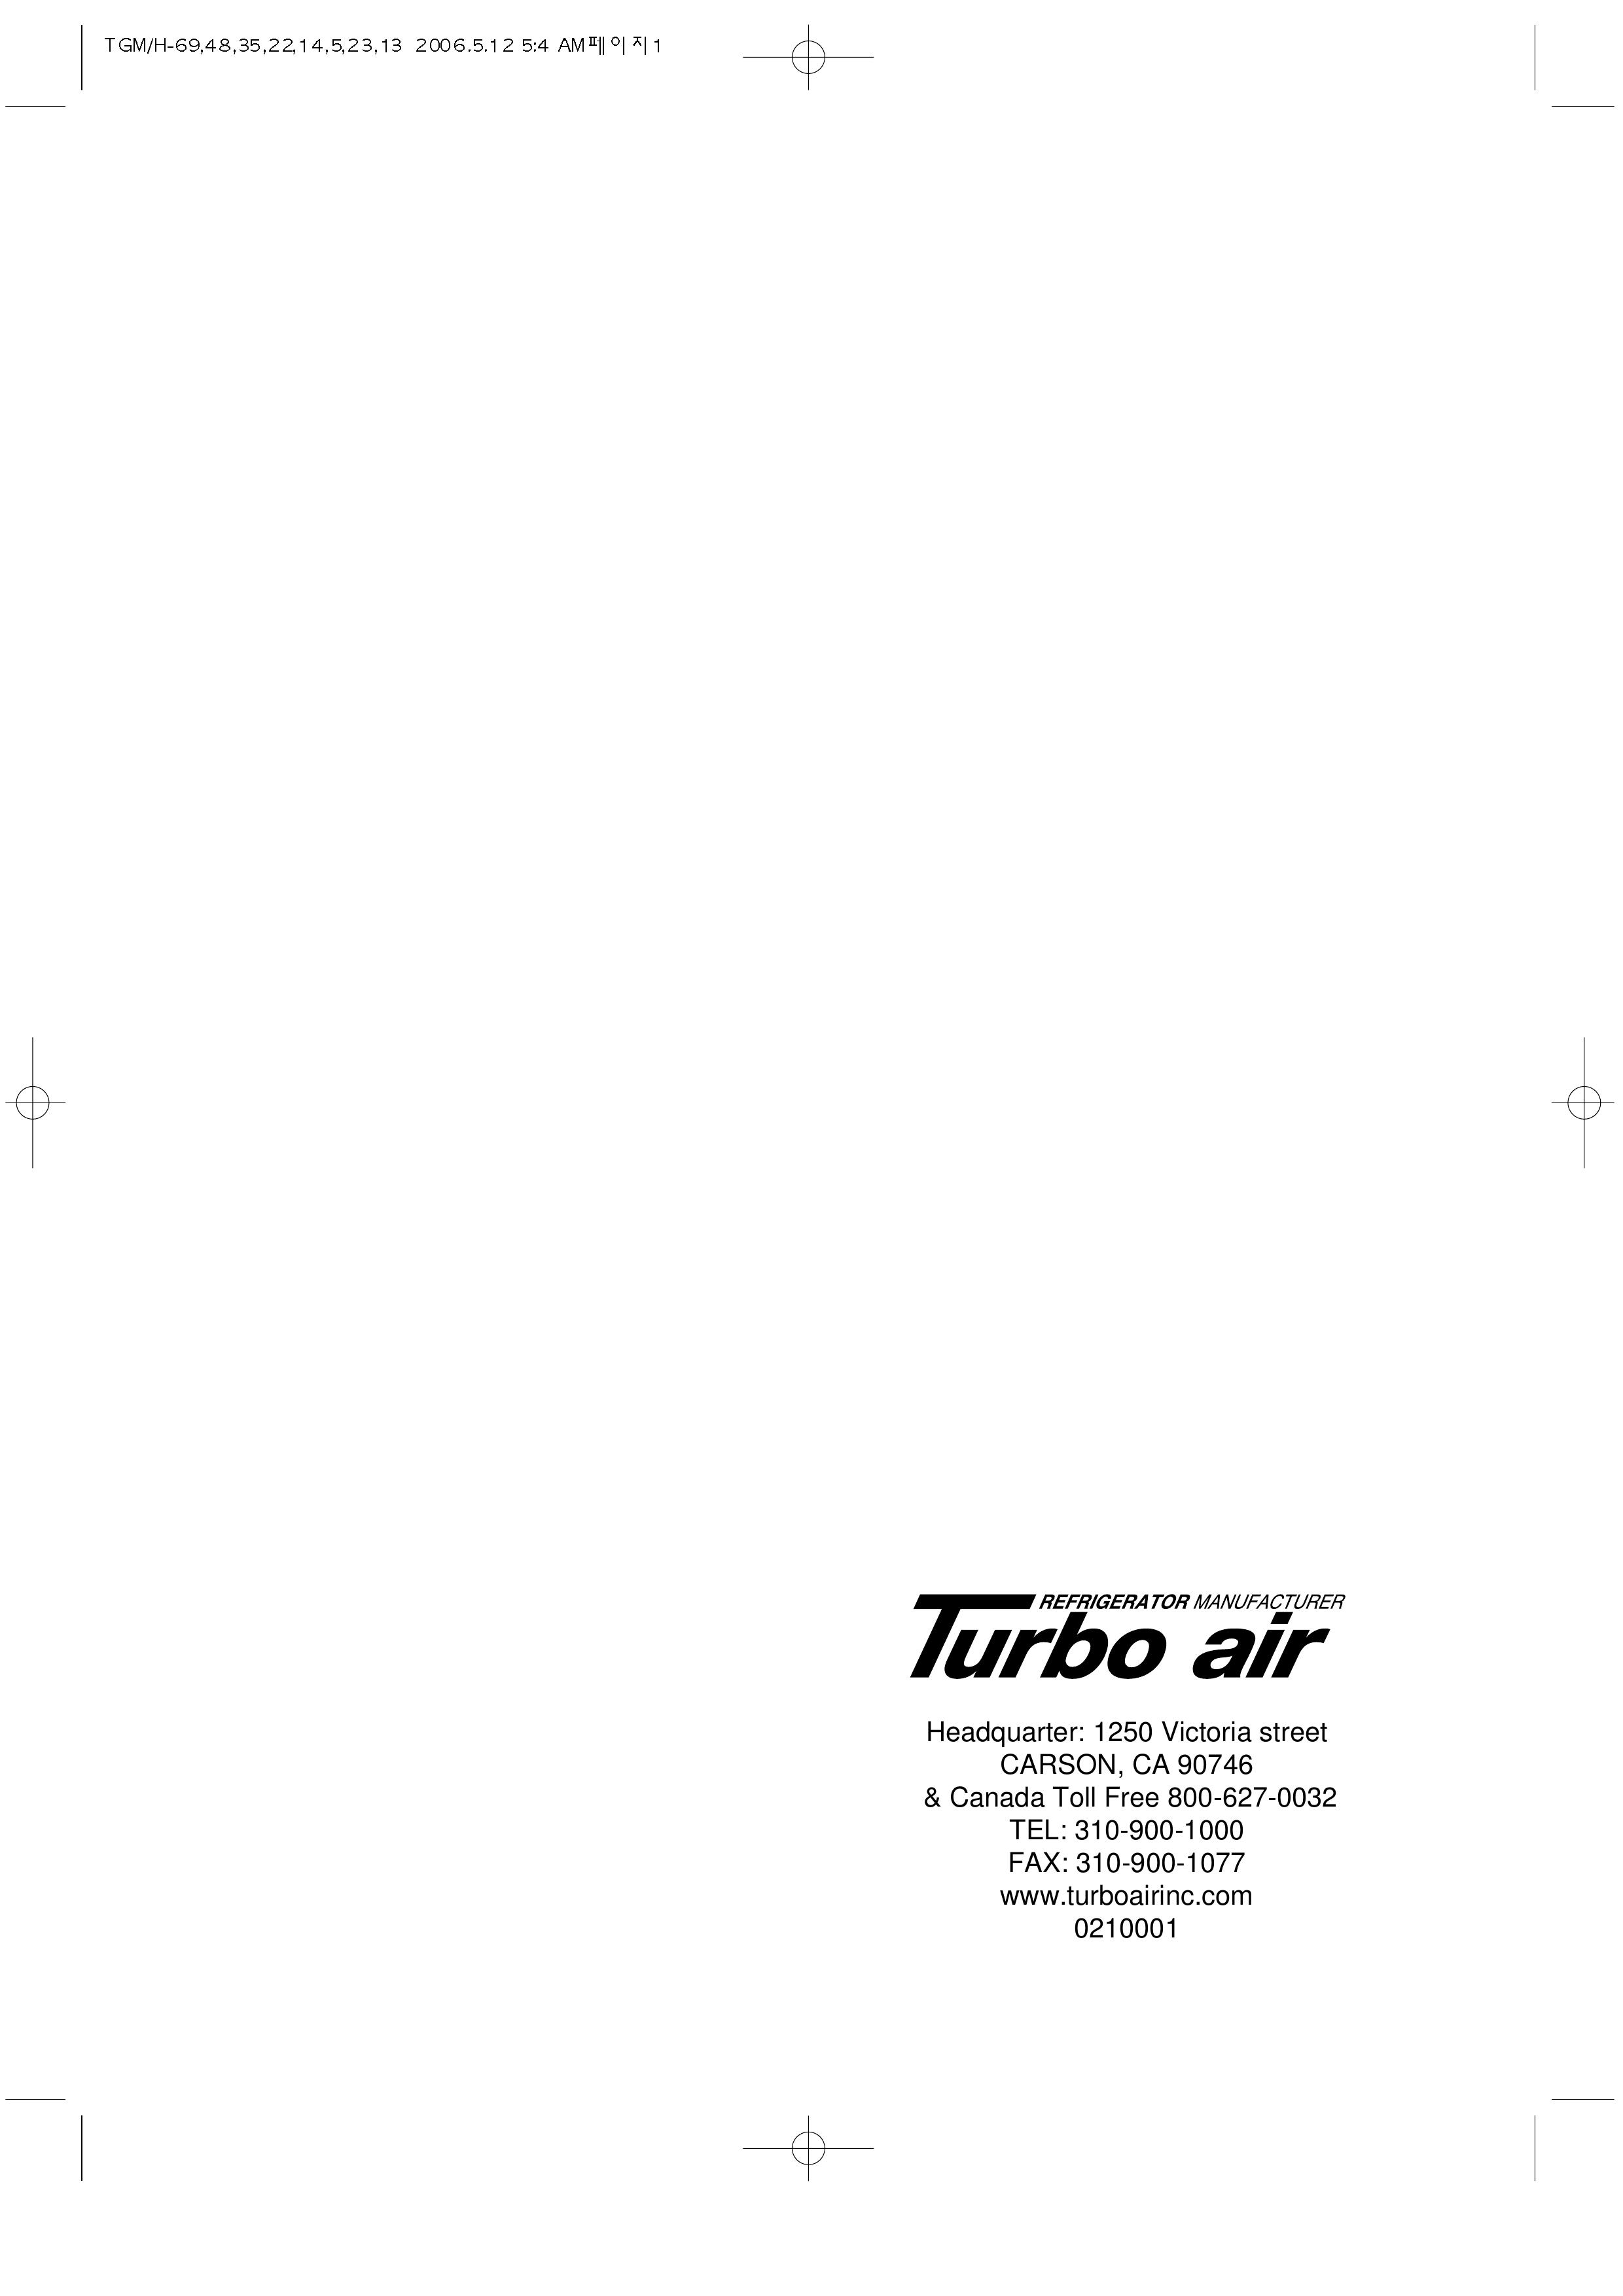 Turbo Air TGM-14R Refrigerator User Manual